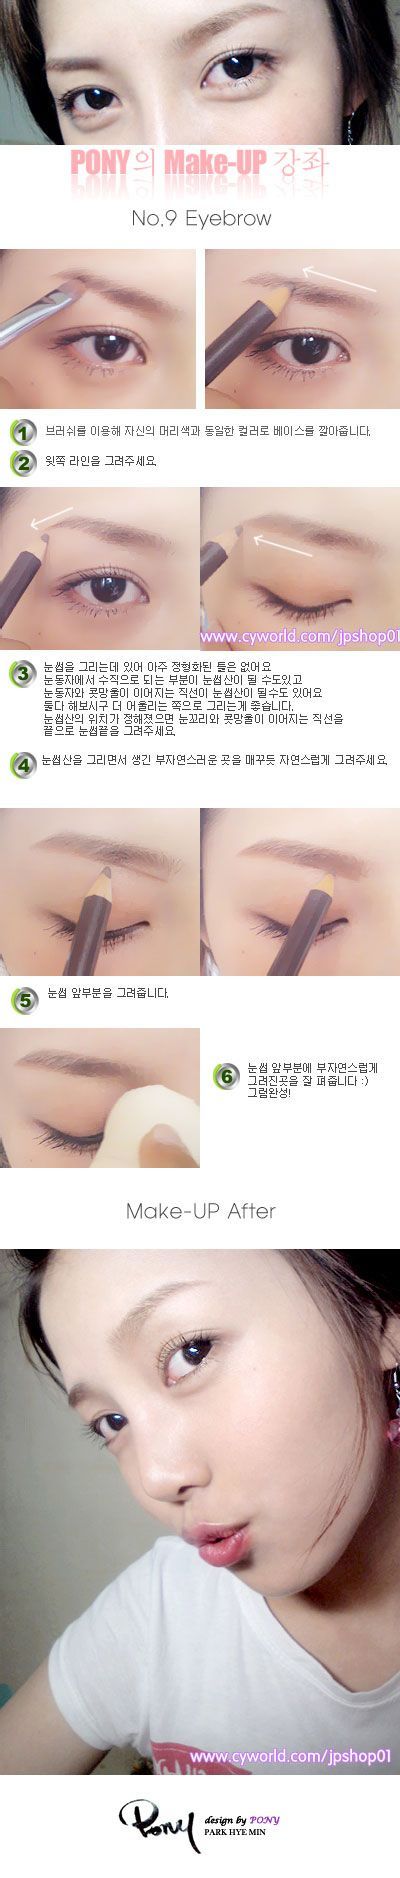 ulzzang-makeup-tutorial-soompi-17_18 Ulzzang make-up tutorial soompi